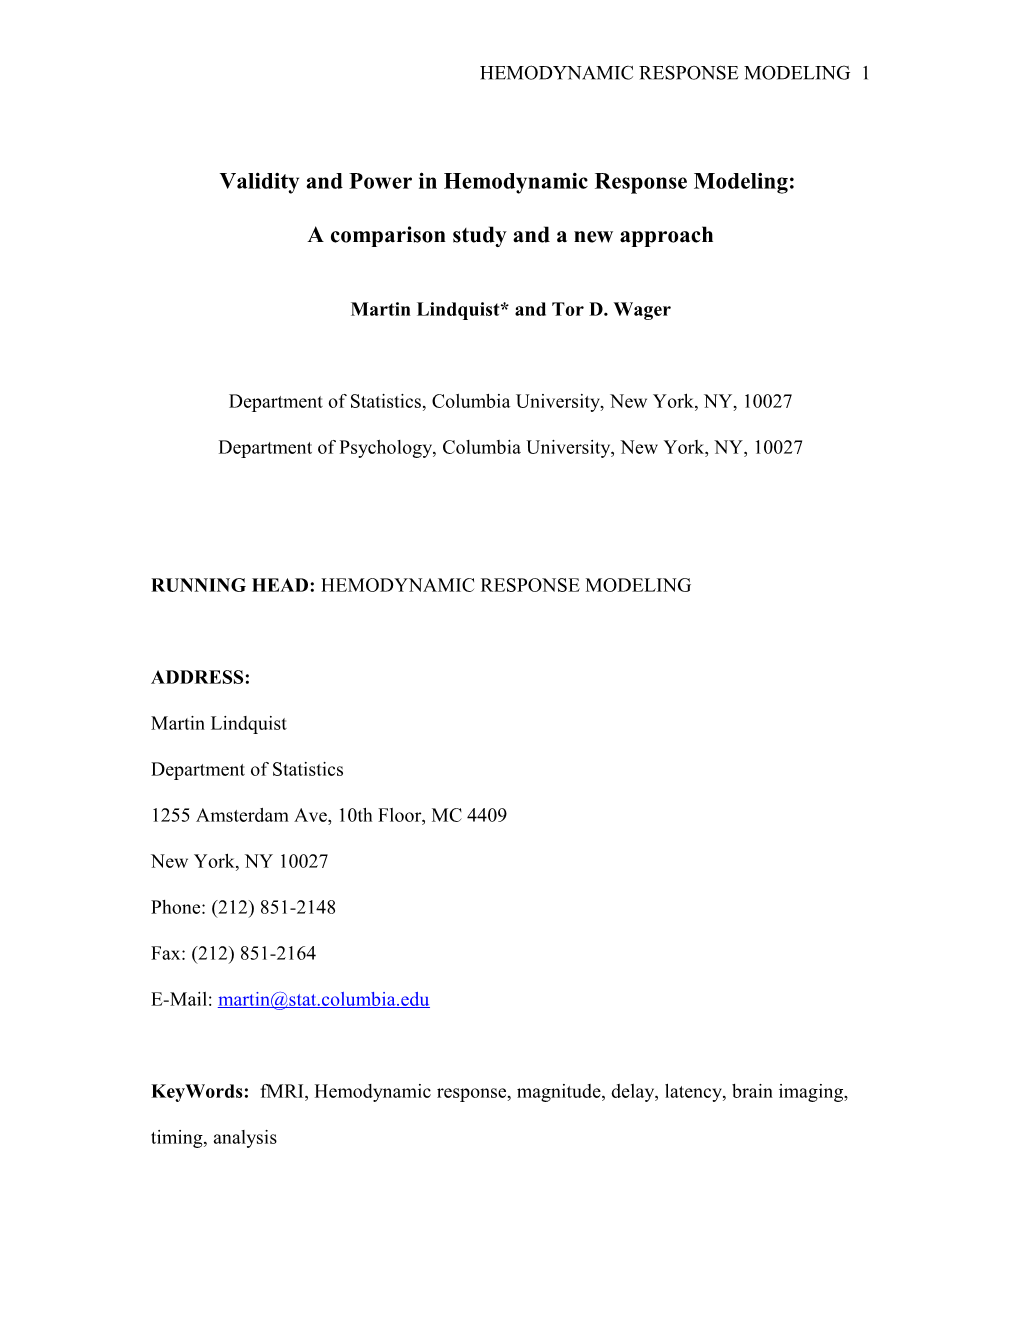 Validity and Power in Hemodynamic Response Modeling